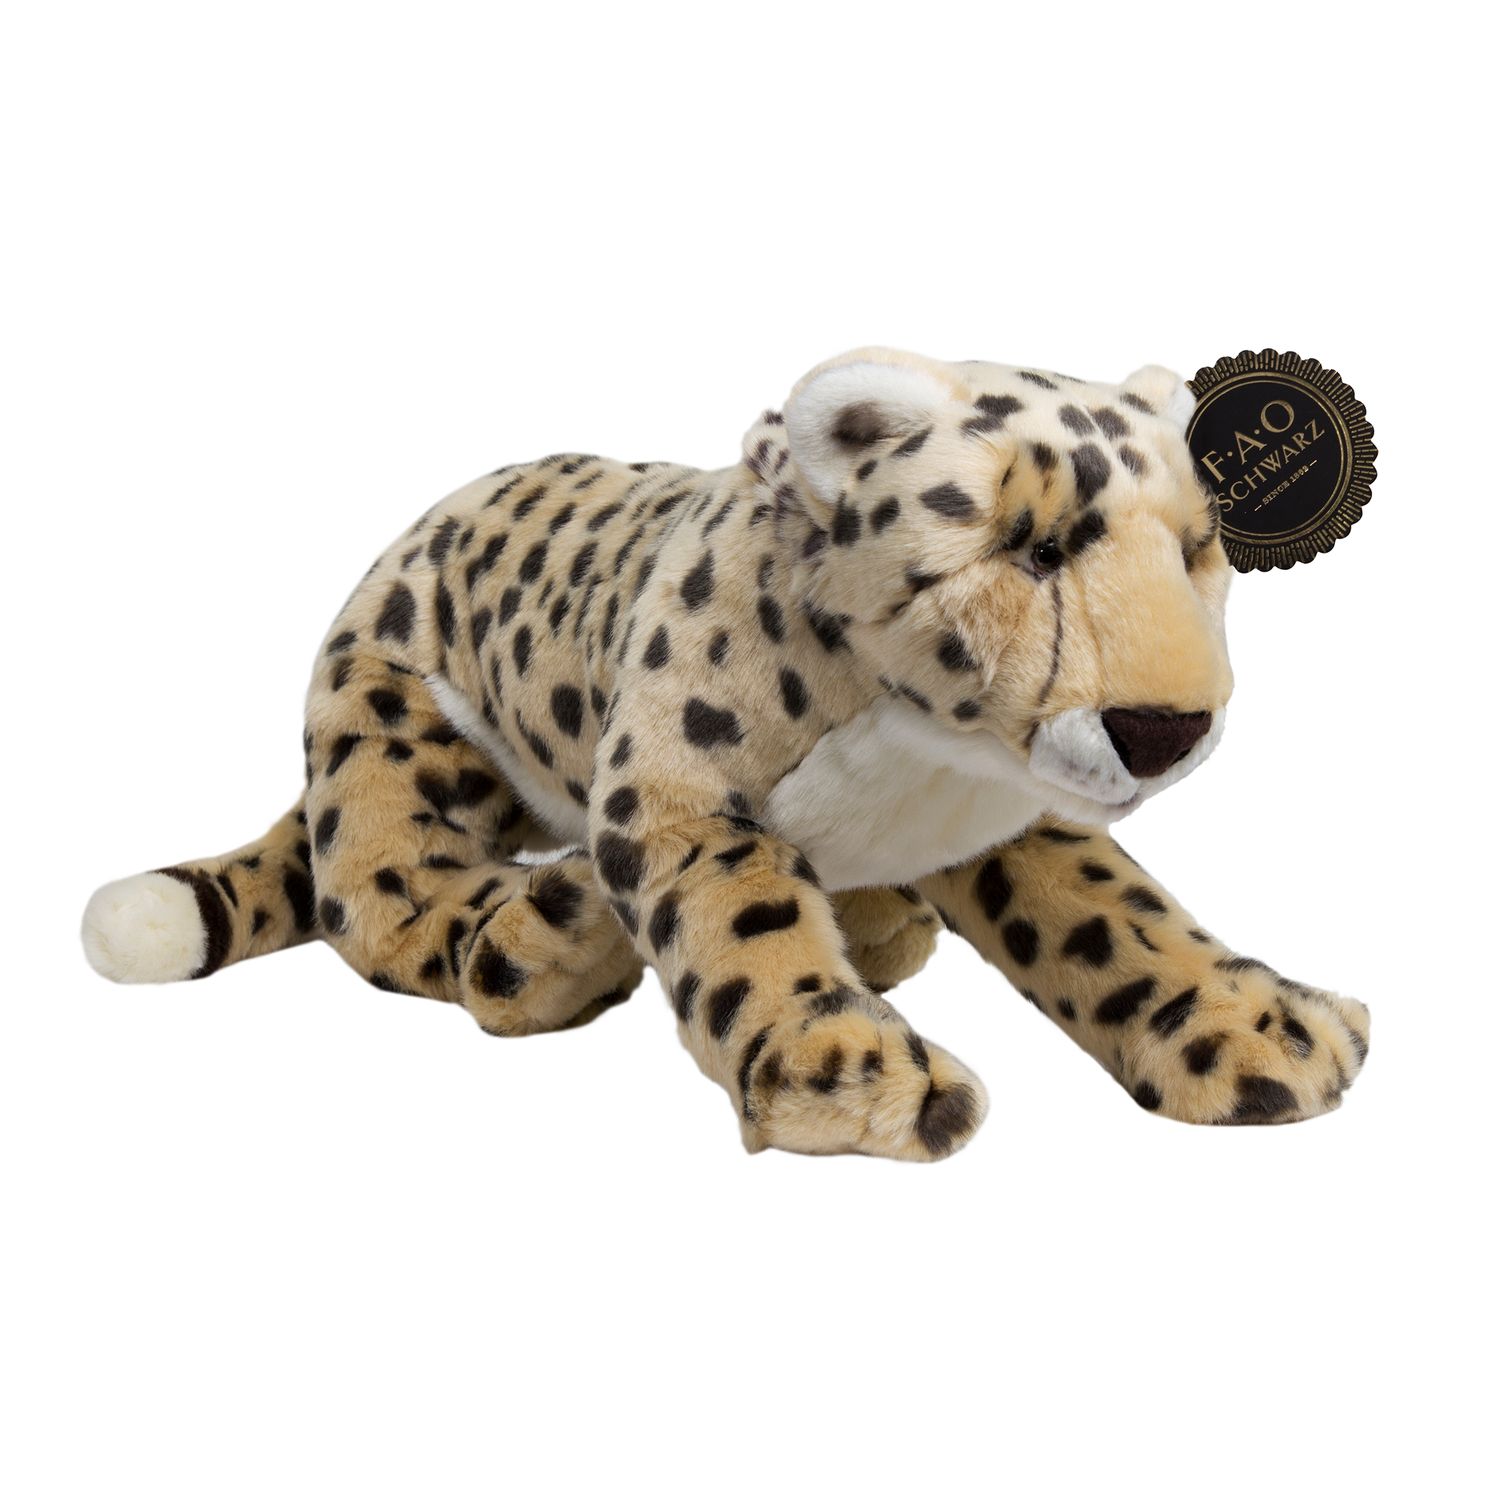 baby cheetah stuffed animal